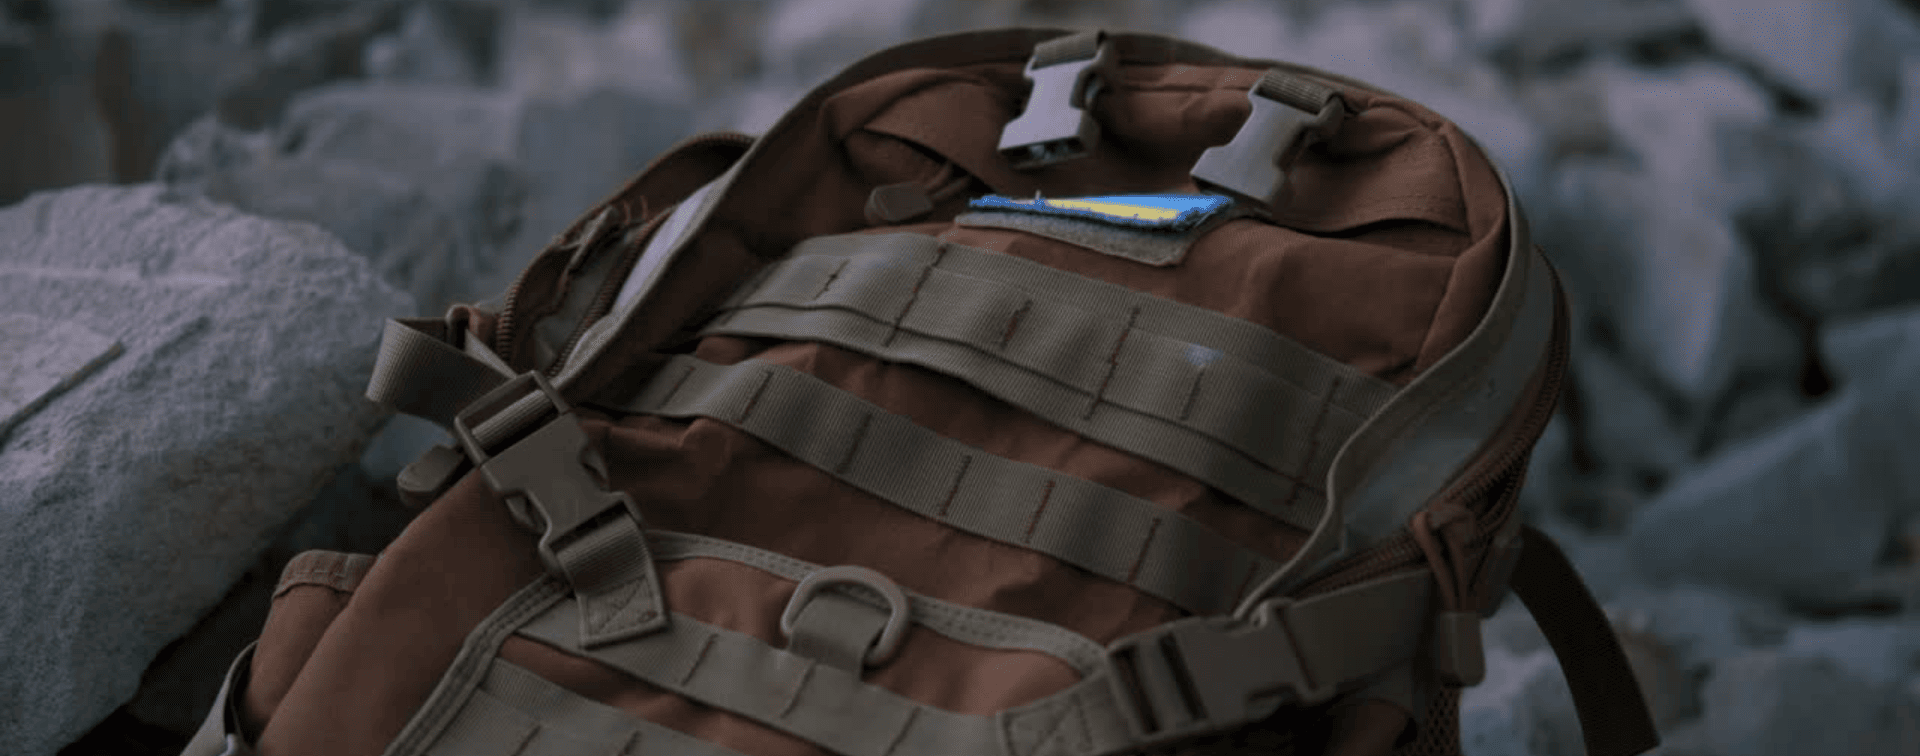 Military backpack